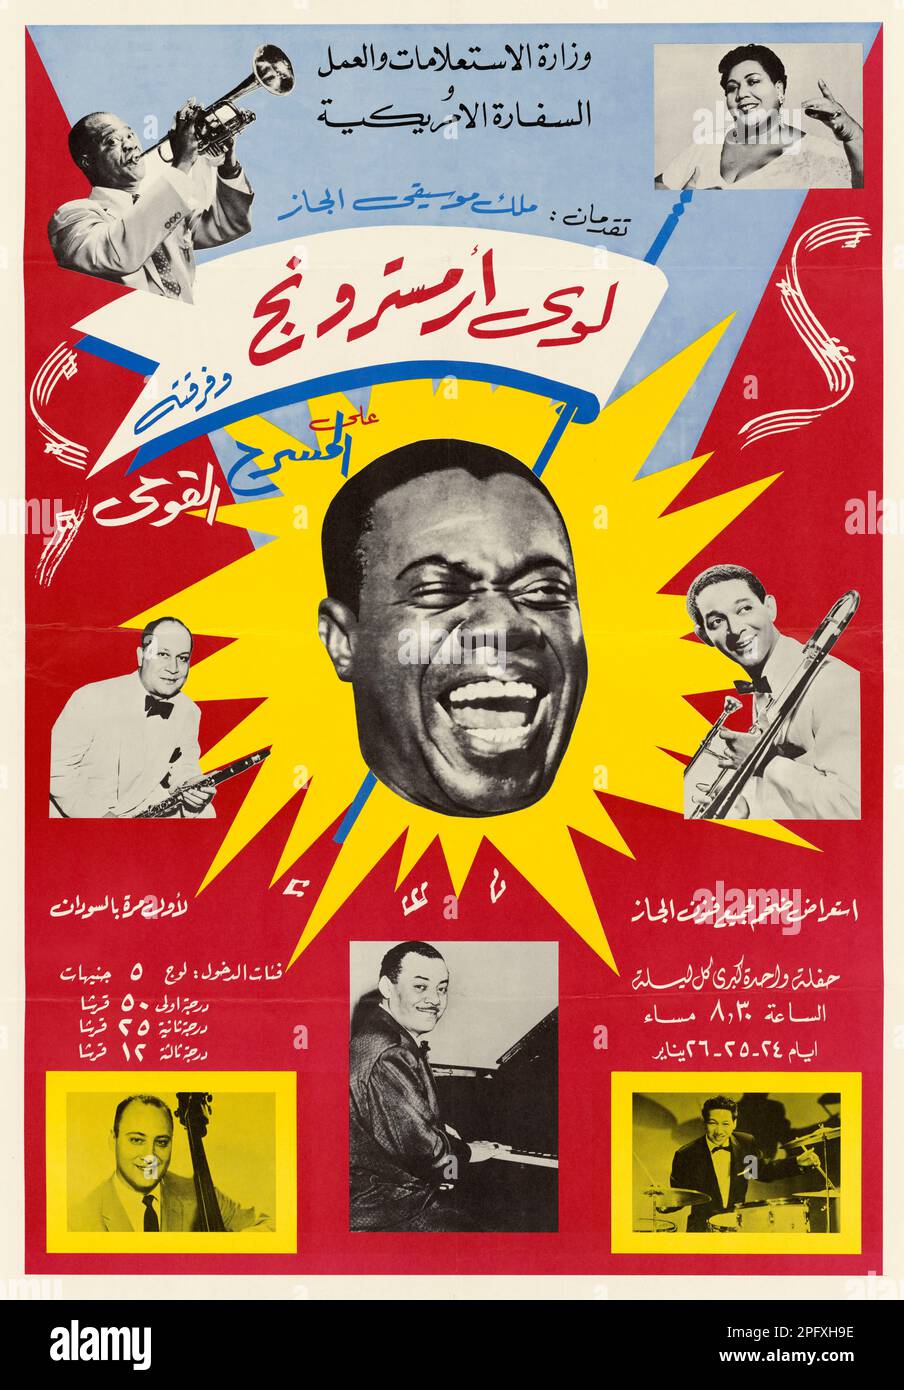 Vecchio poster con Louis Armstrong, Dizzie Gillespie, Mahalia Jackson, Conte Bassie - medio-est, lettere arabe Foto Stock